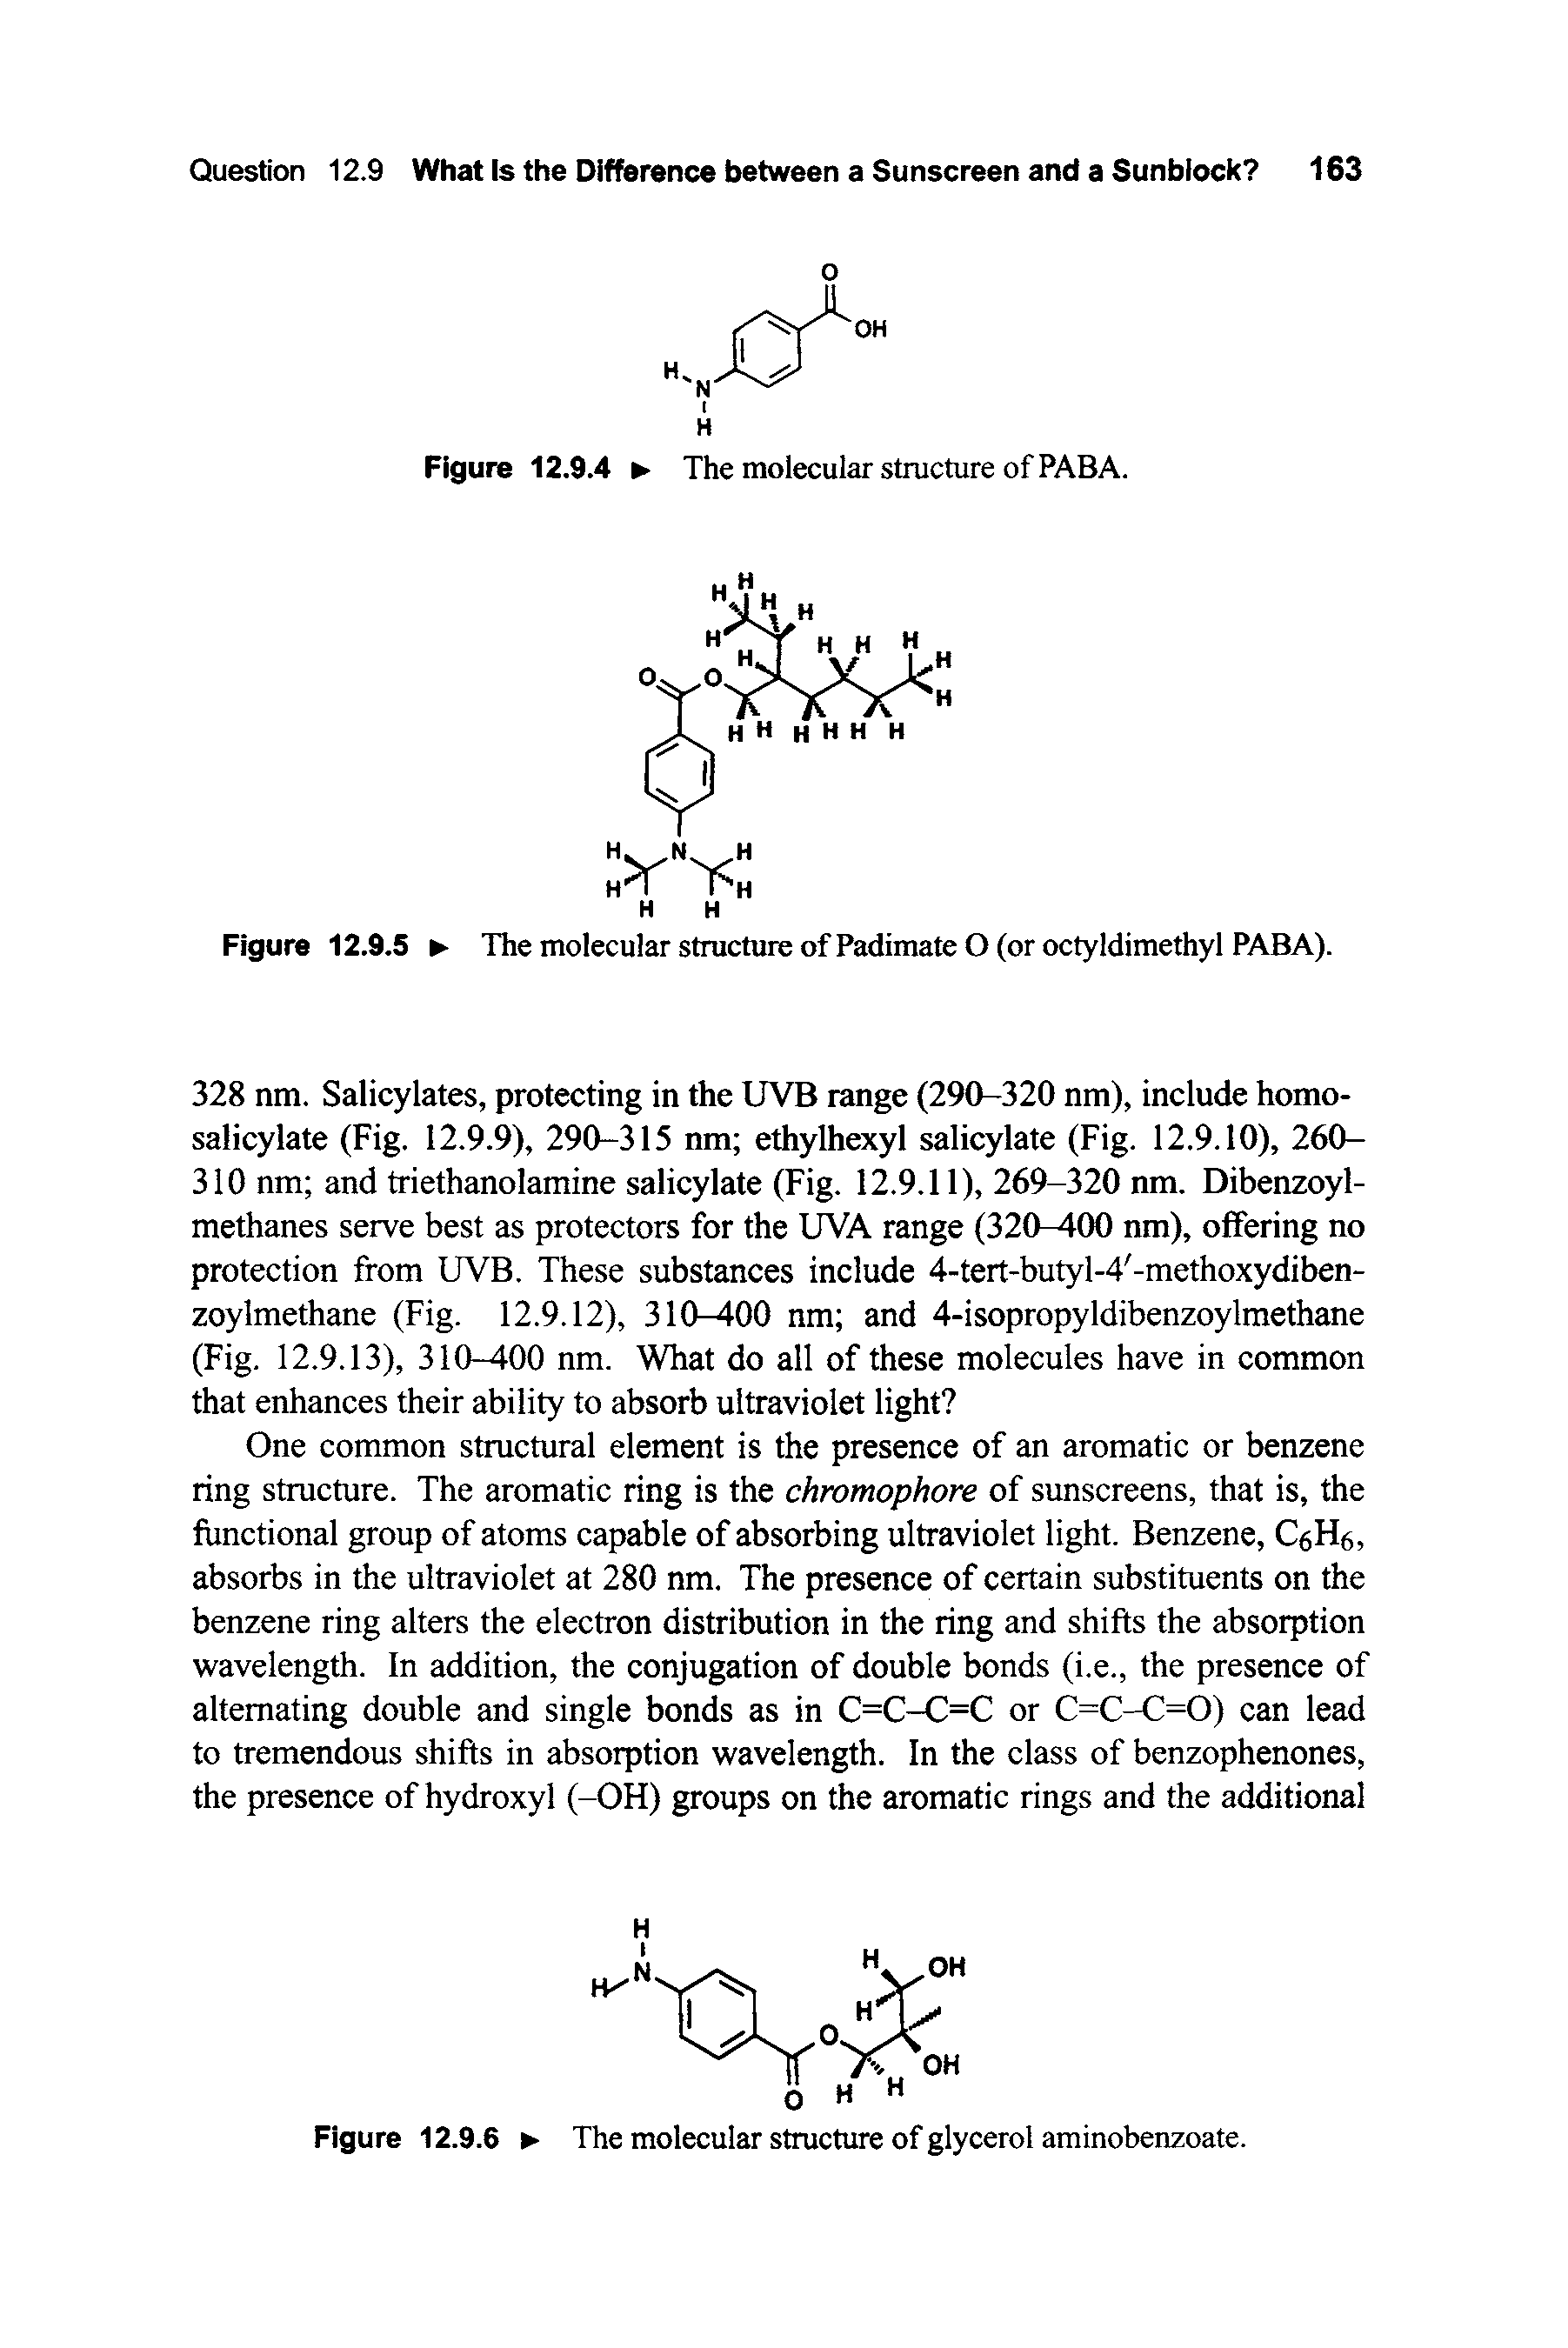 Figure 12.9.5 The molecular structure of PadimateO (or octyldimethyl PABA).